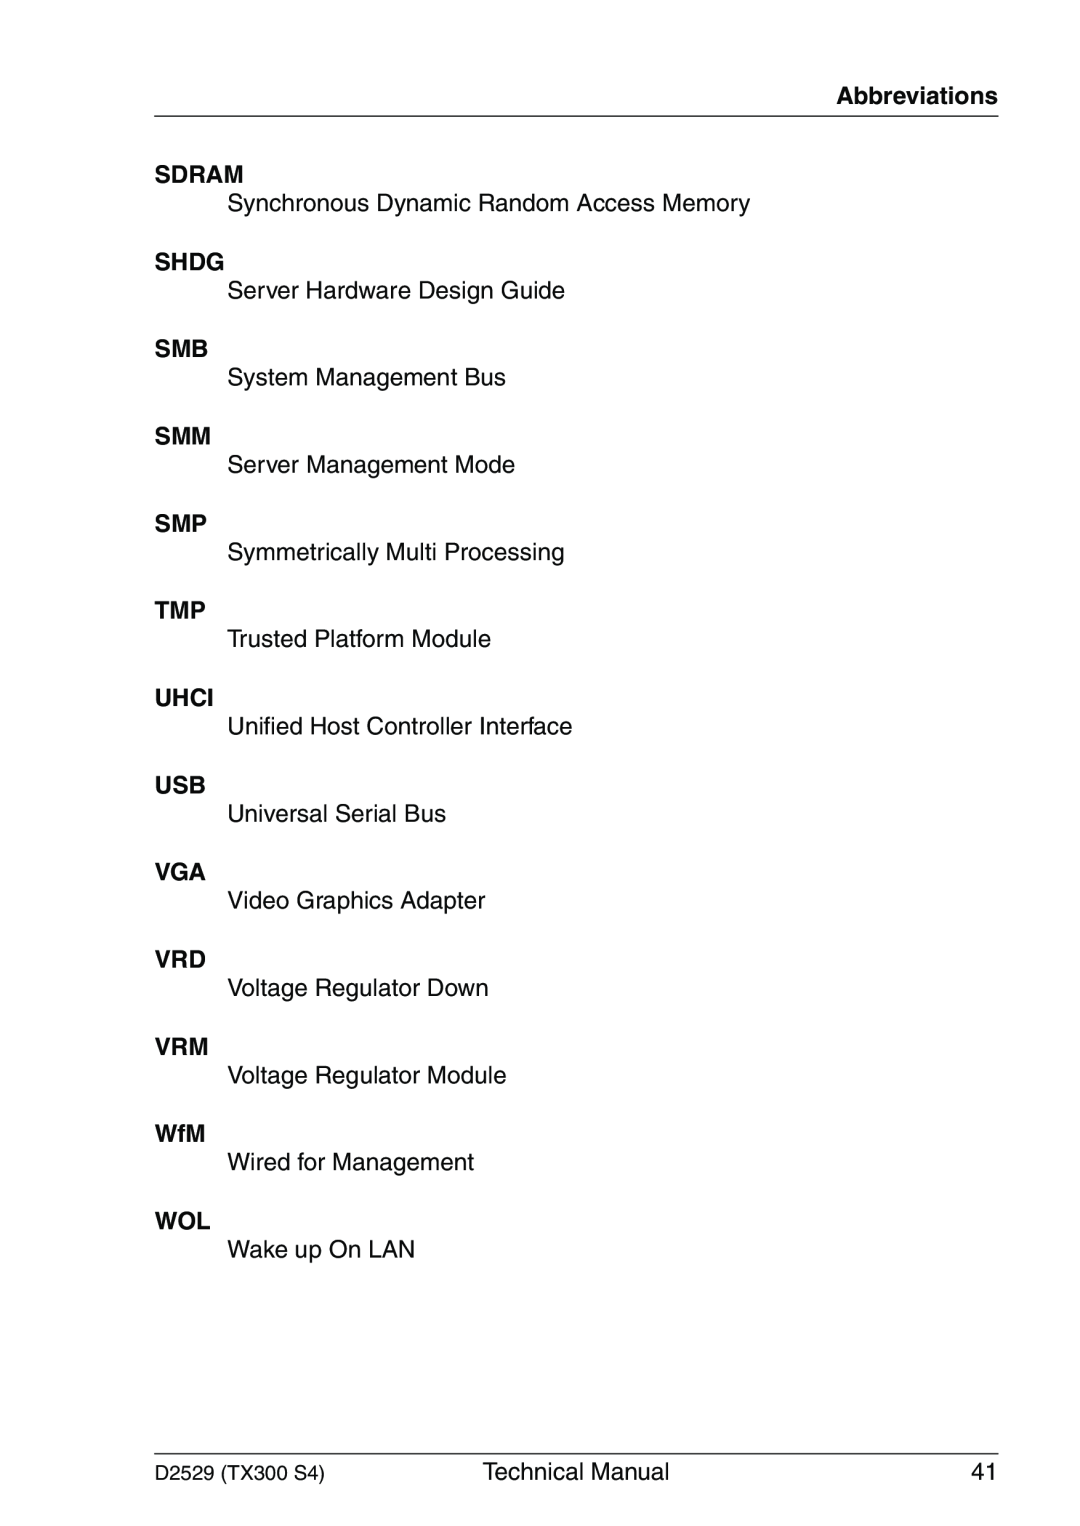 Fujitsu D2529 technical manual Abbreviations SDRAM, Shdg, Uhci 